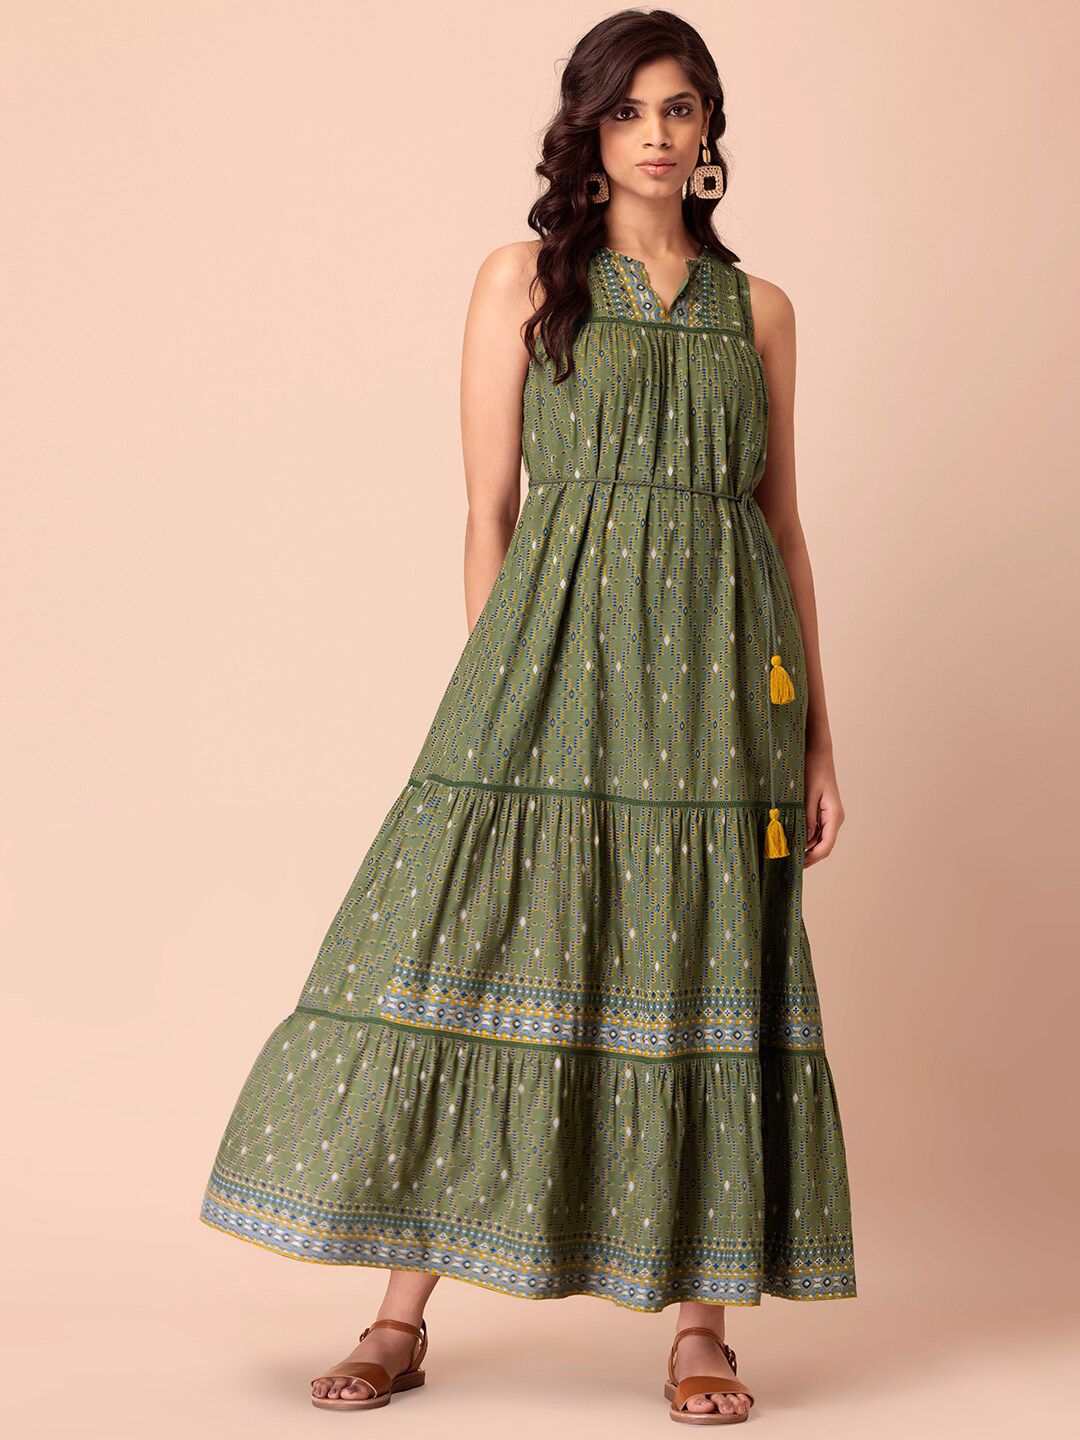 INDYA Green & Blue Ethnic Motifs Ethnic Maxi Dress Price in India